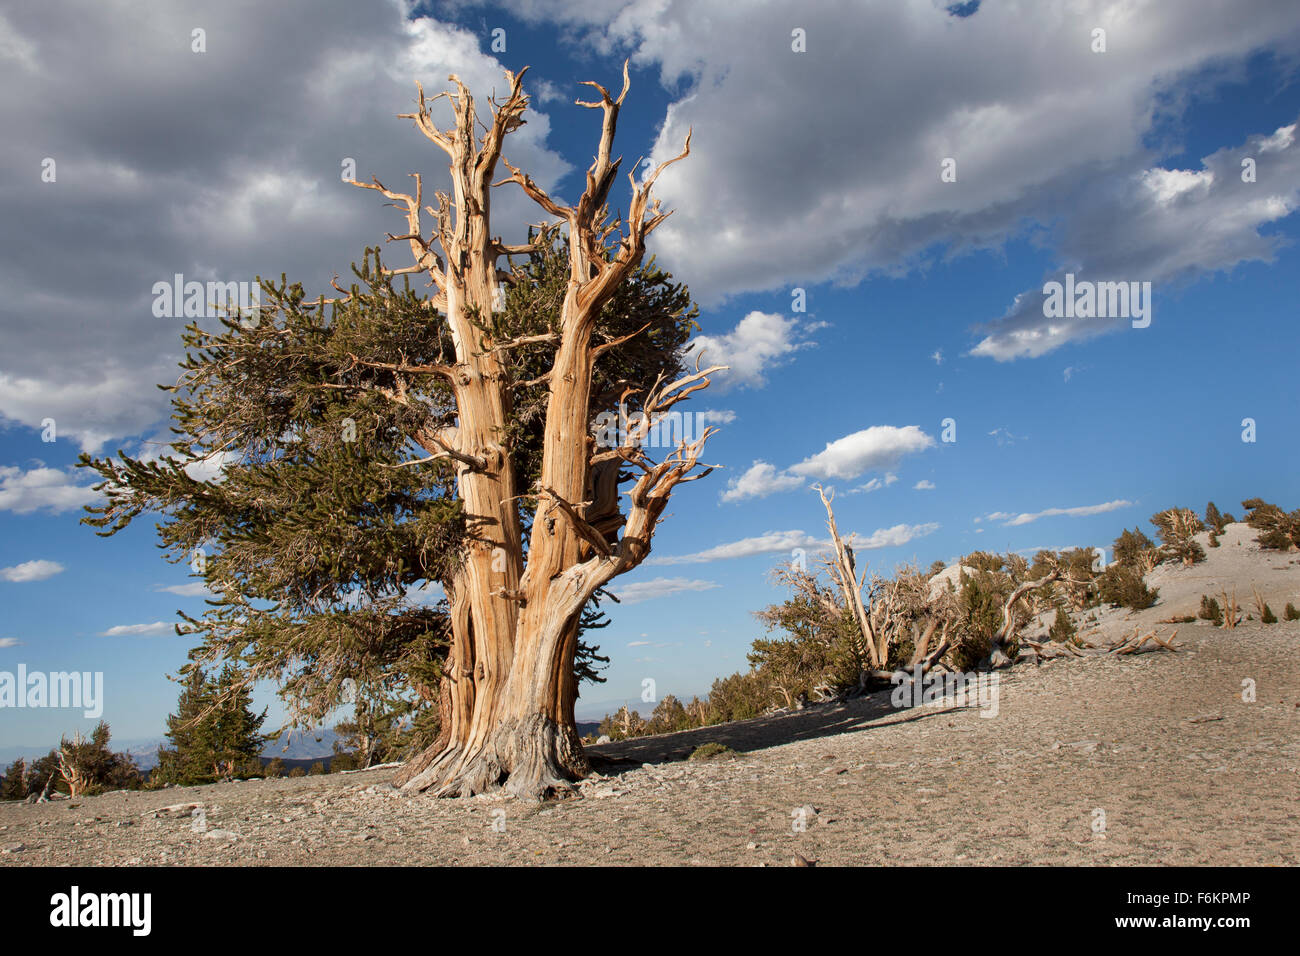 Ancient Bristlecone Pine Tree. Grove, ancien Patriarche Bristlecone Pine Forest, Californie, USA. Banque D'Images